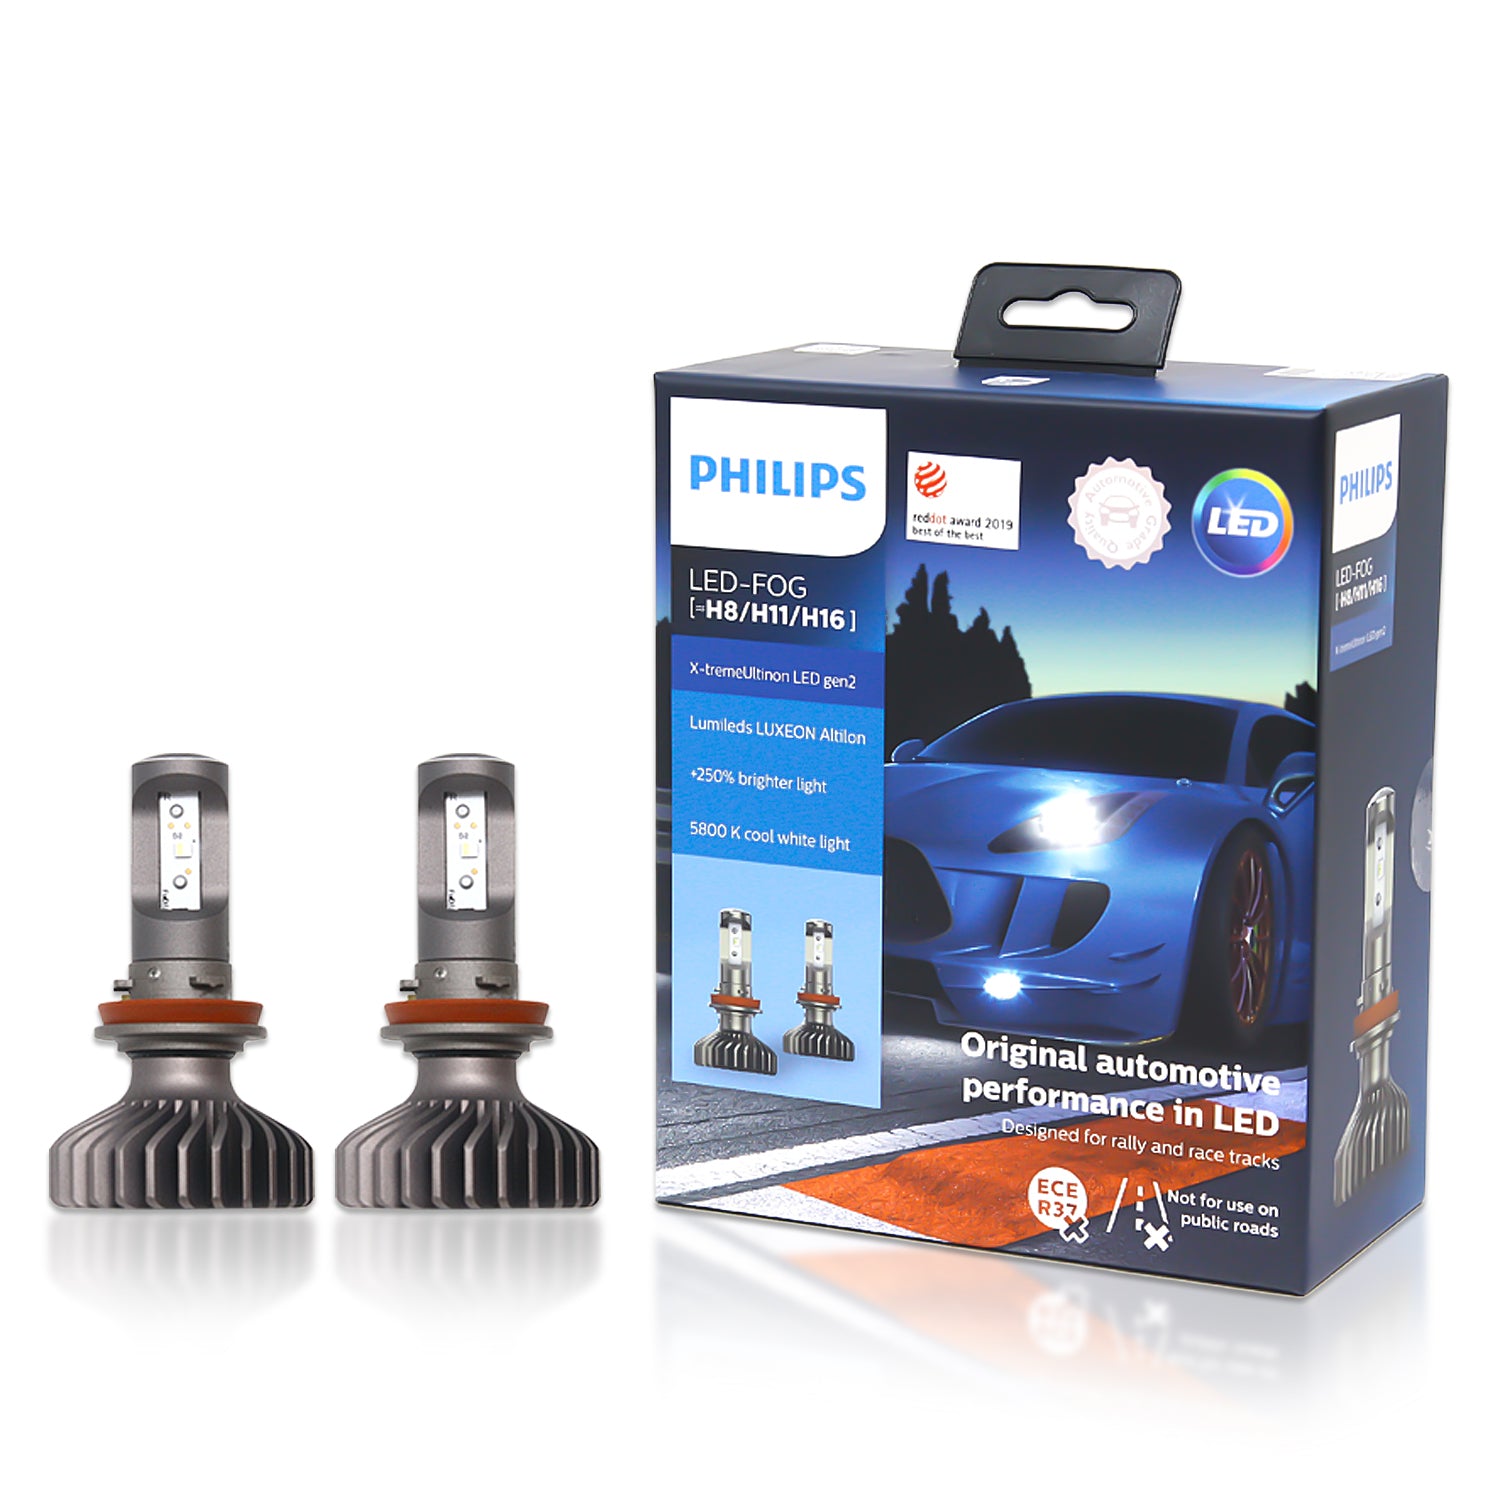 Daylights Austria - Philips H11 LED Ultinon Access Headlight 6000K